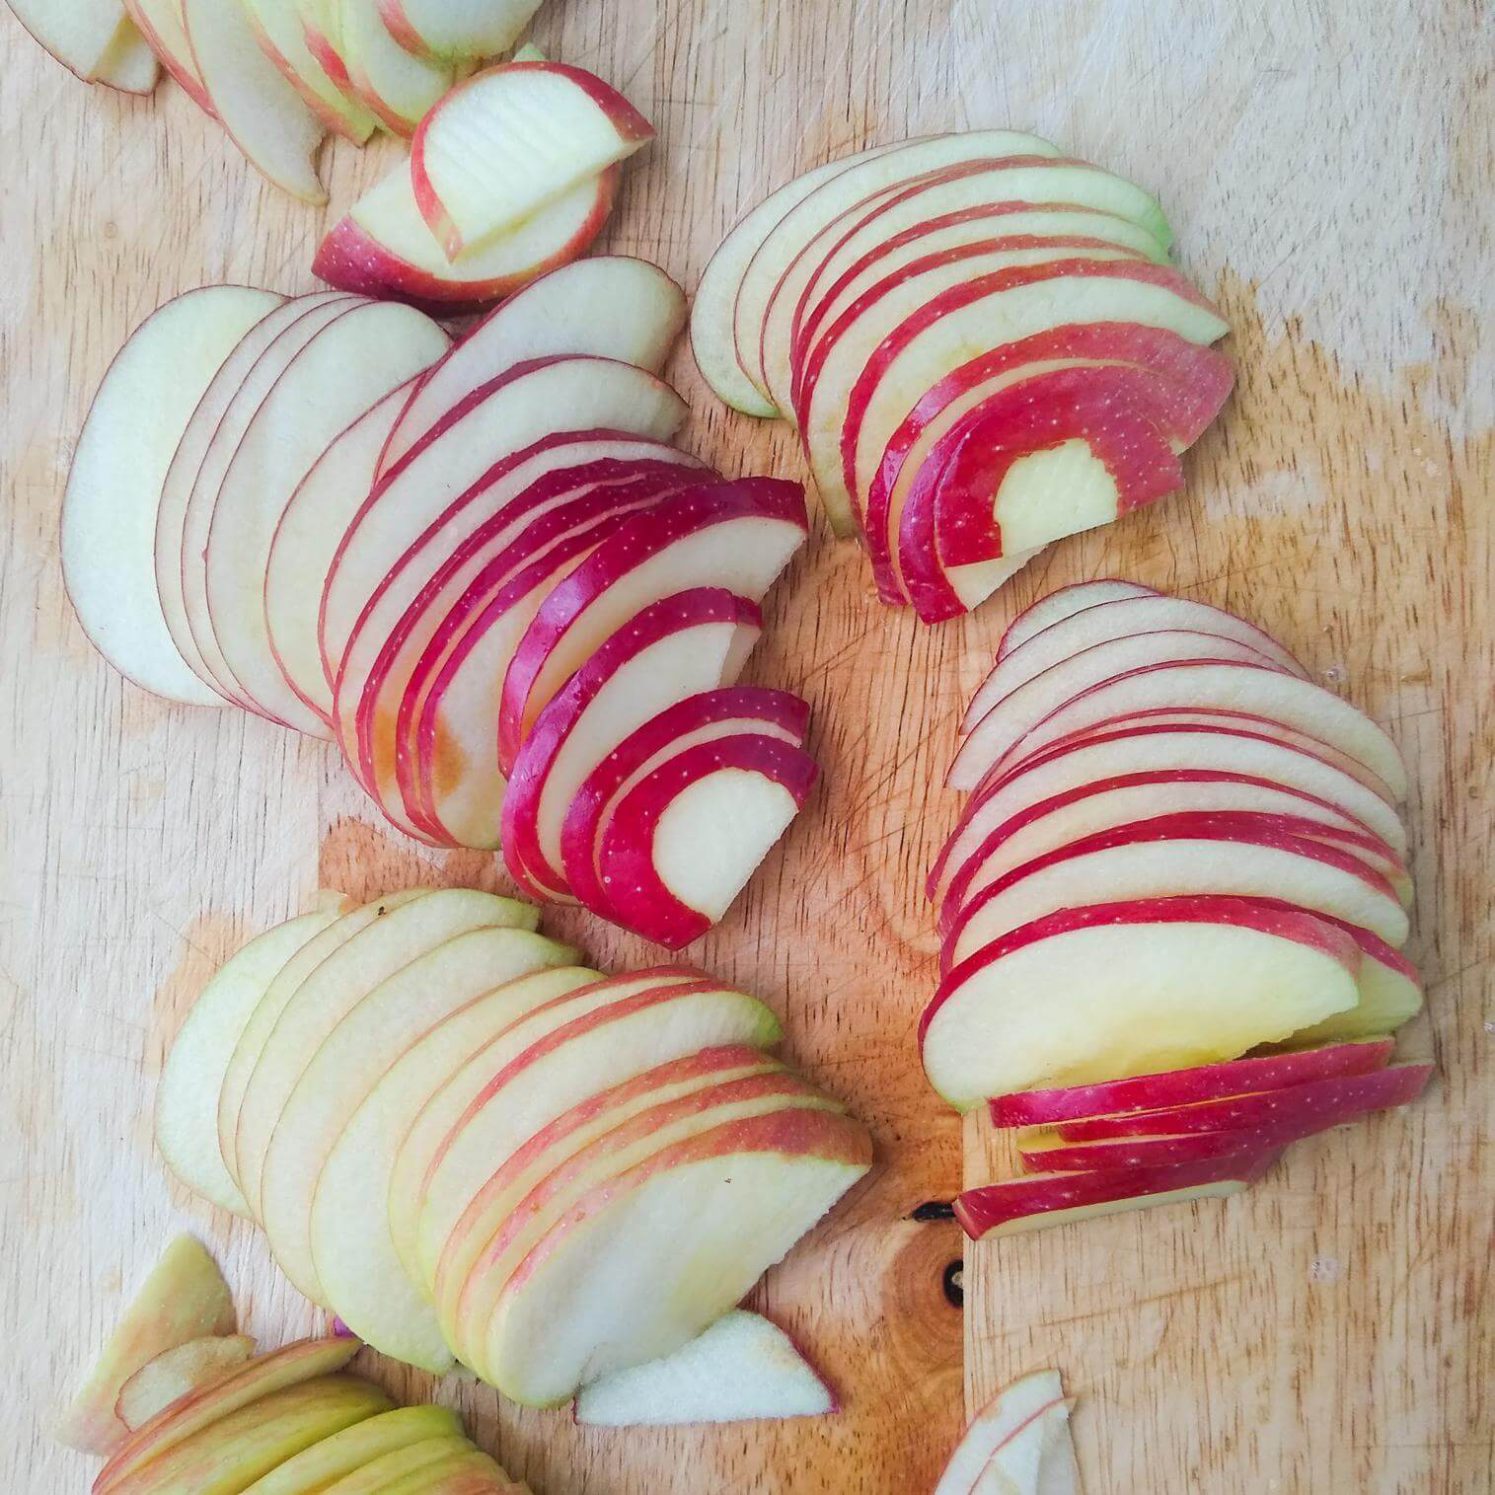 Thin Apple Slices